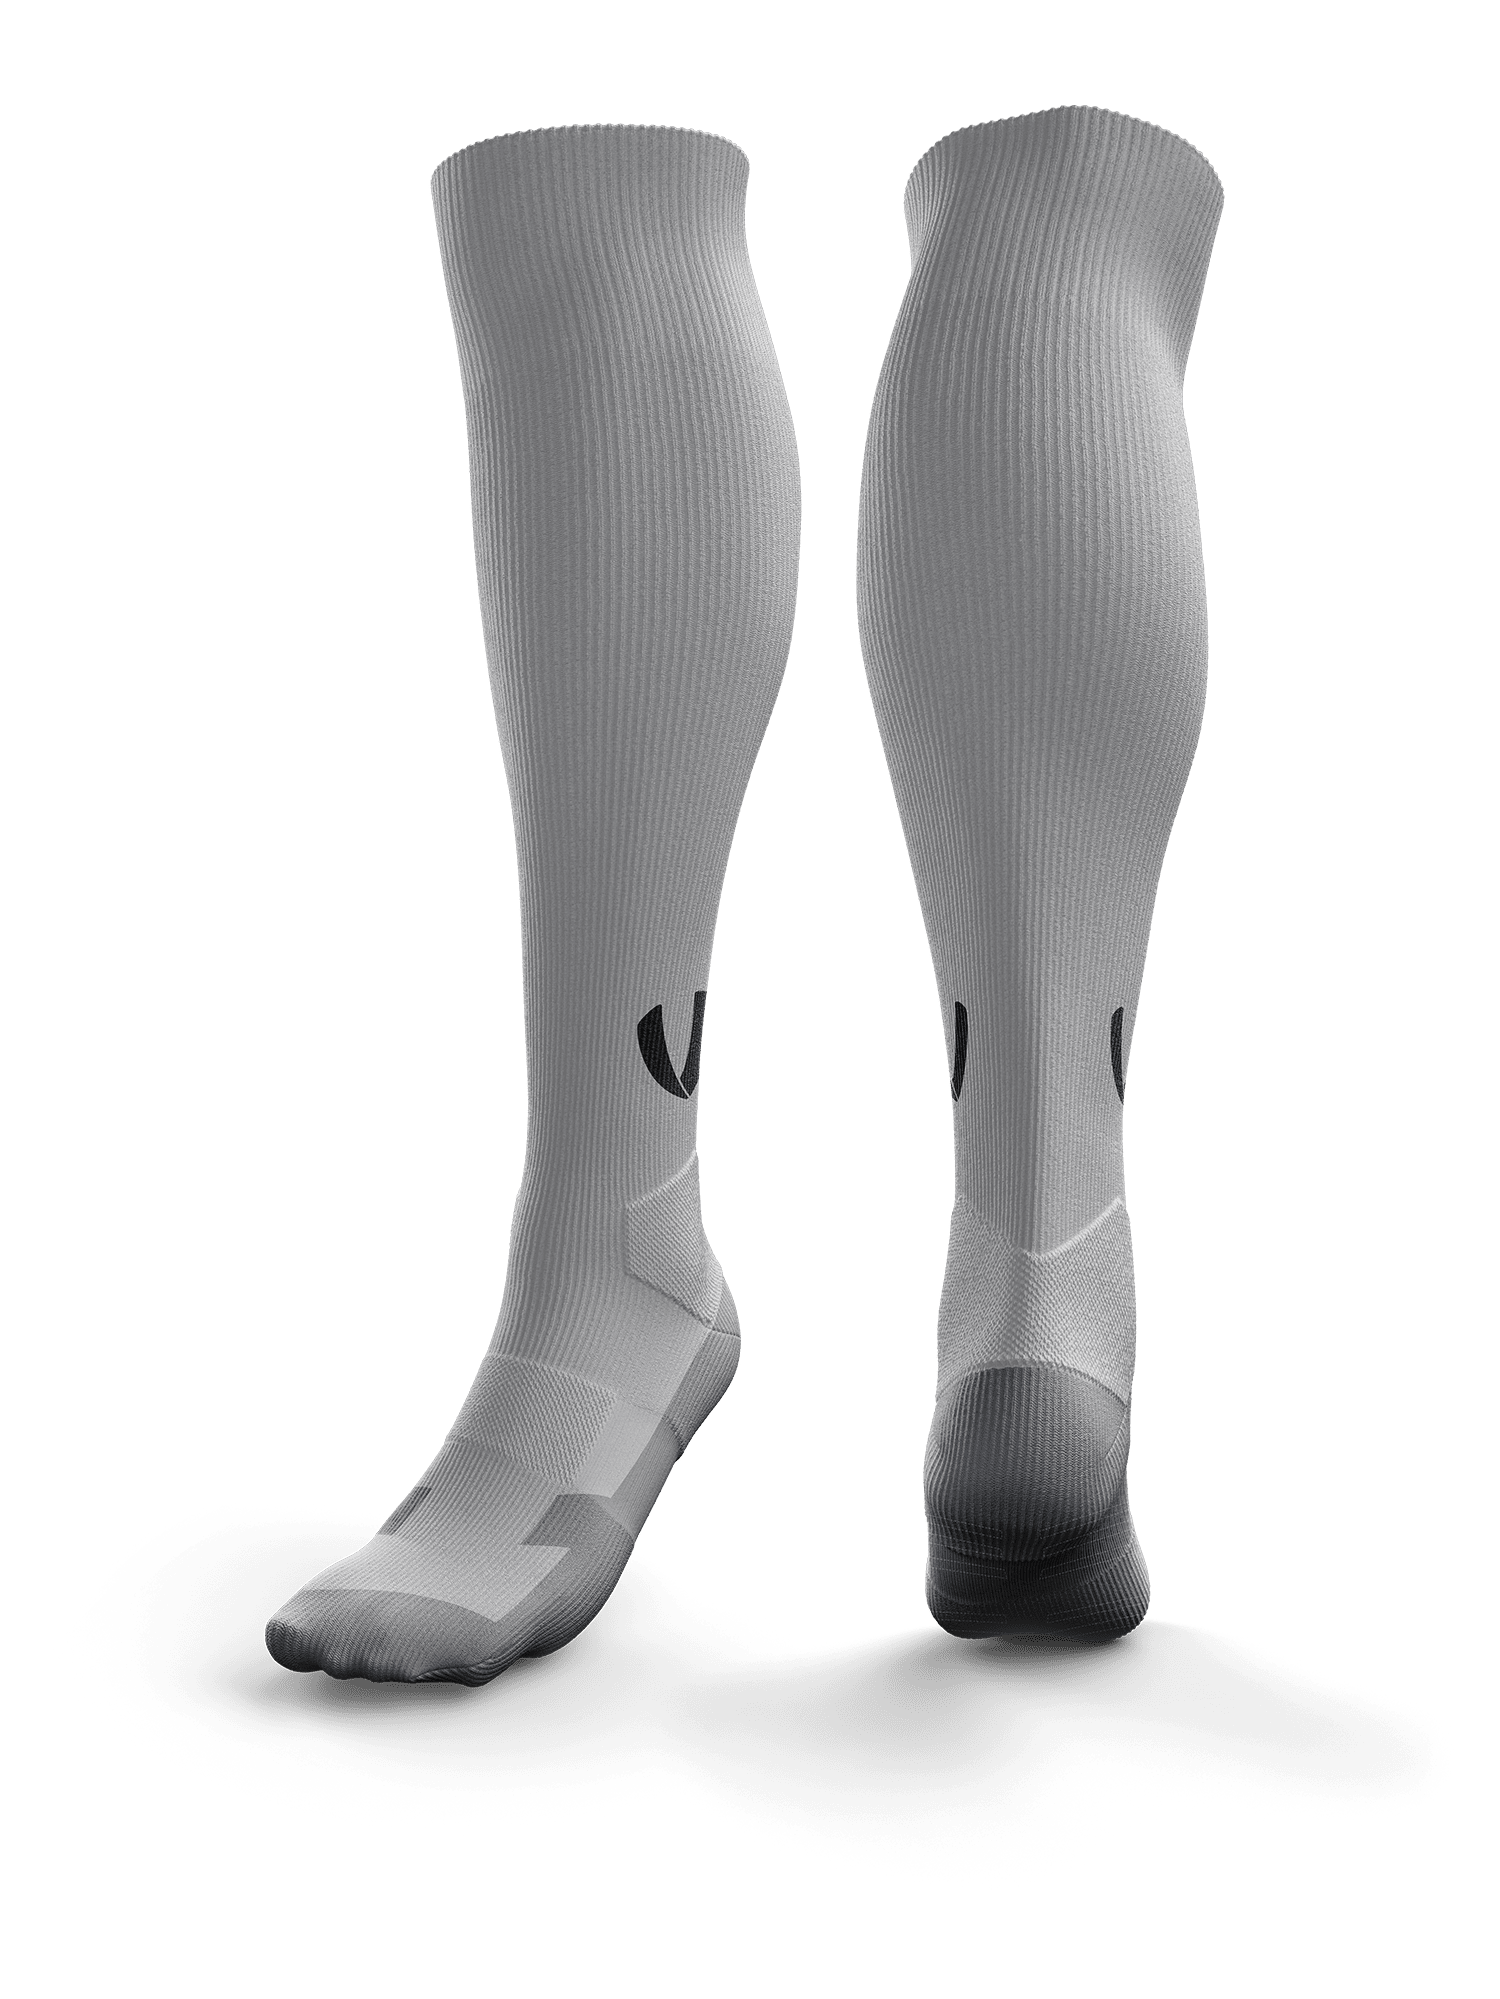 Performance Sock 2.0 Grey Combined